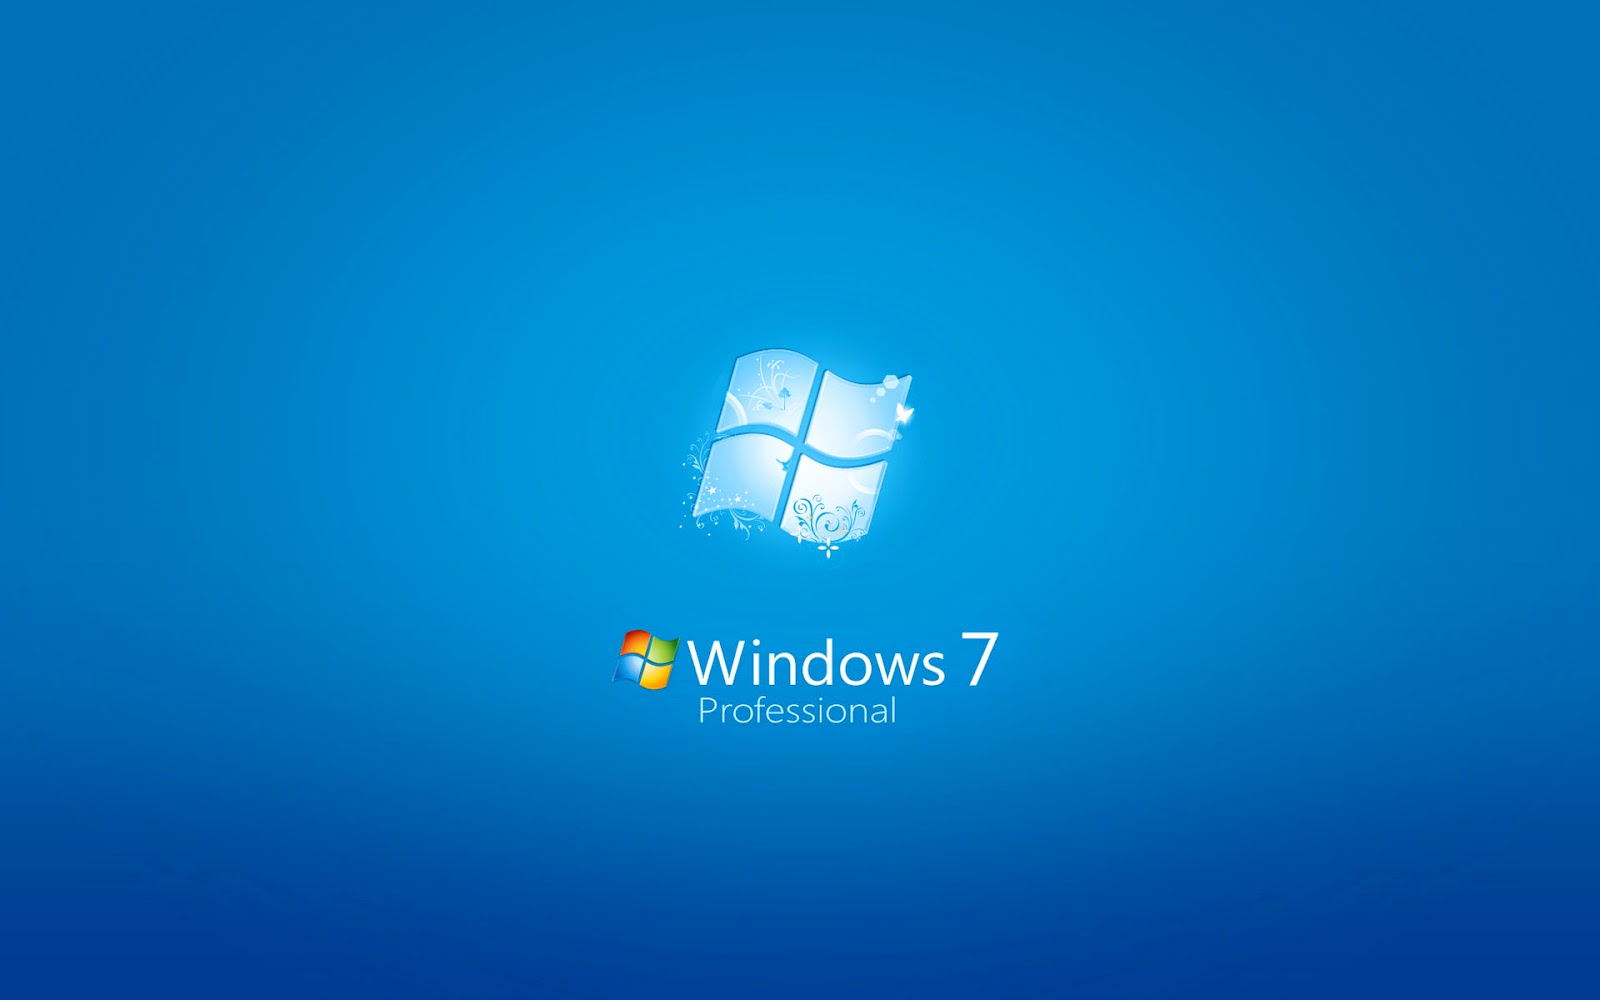 Windows 7 images for desktop WhatsApp Girls Number Wallpapers